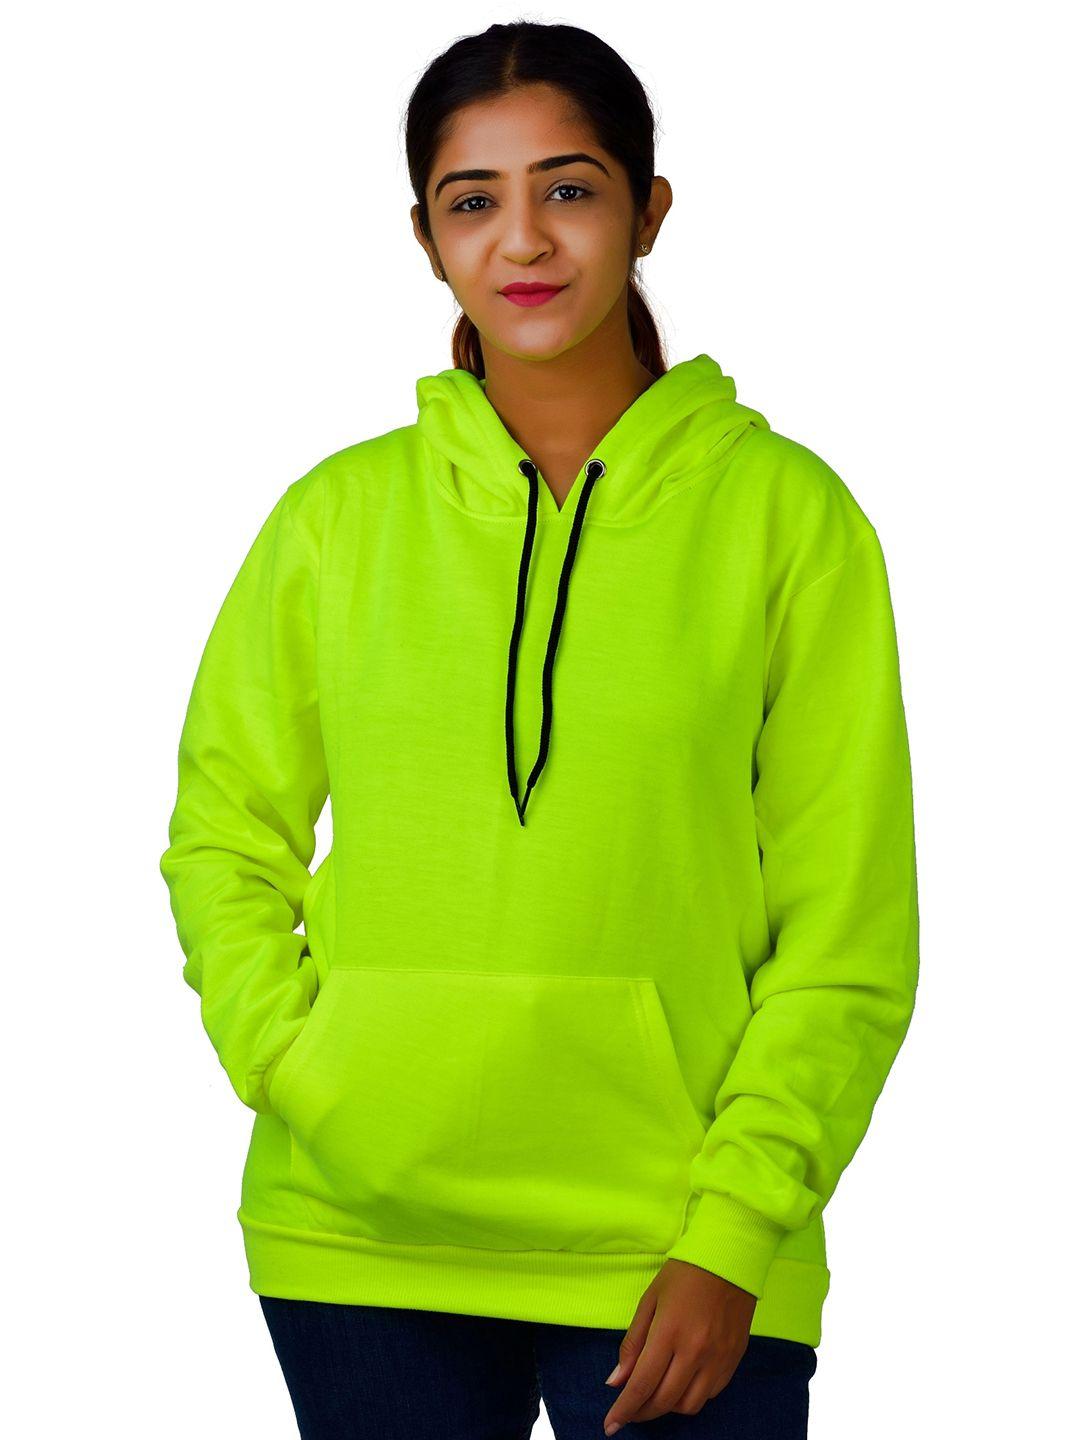 divra clothing unisex fluorescent green hooded sweatshirt